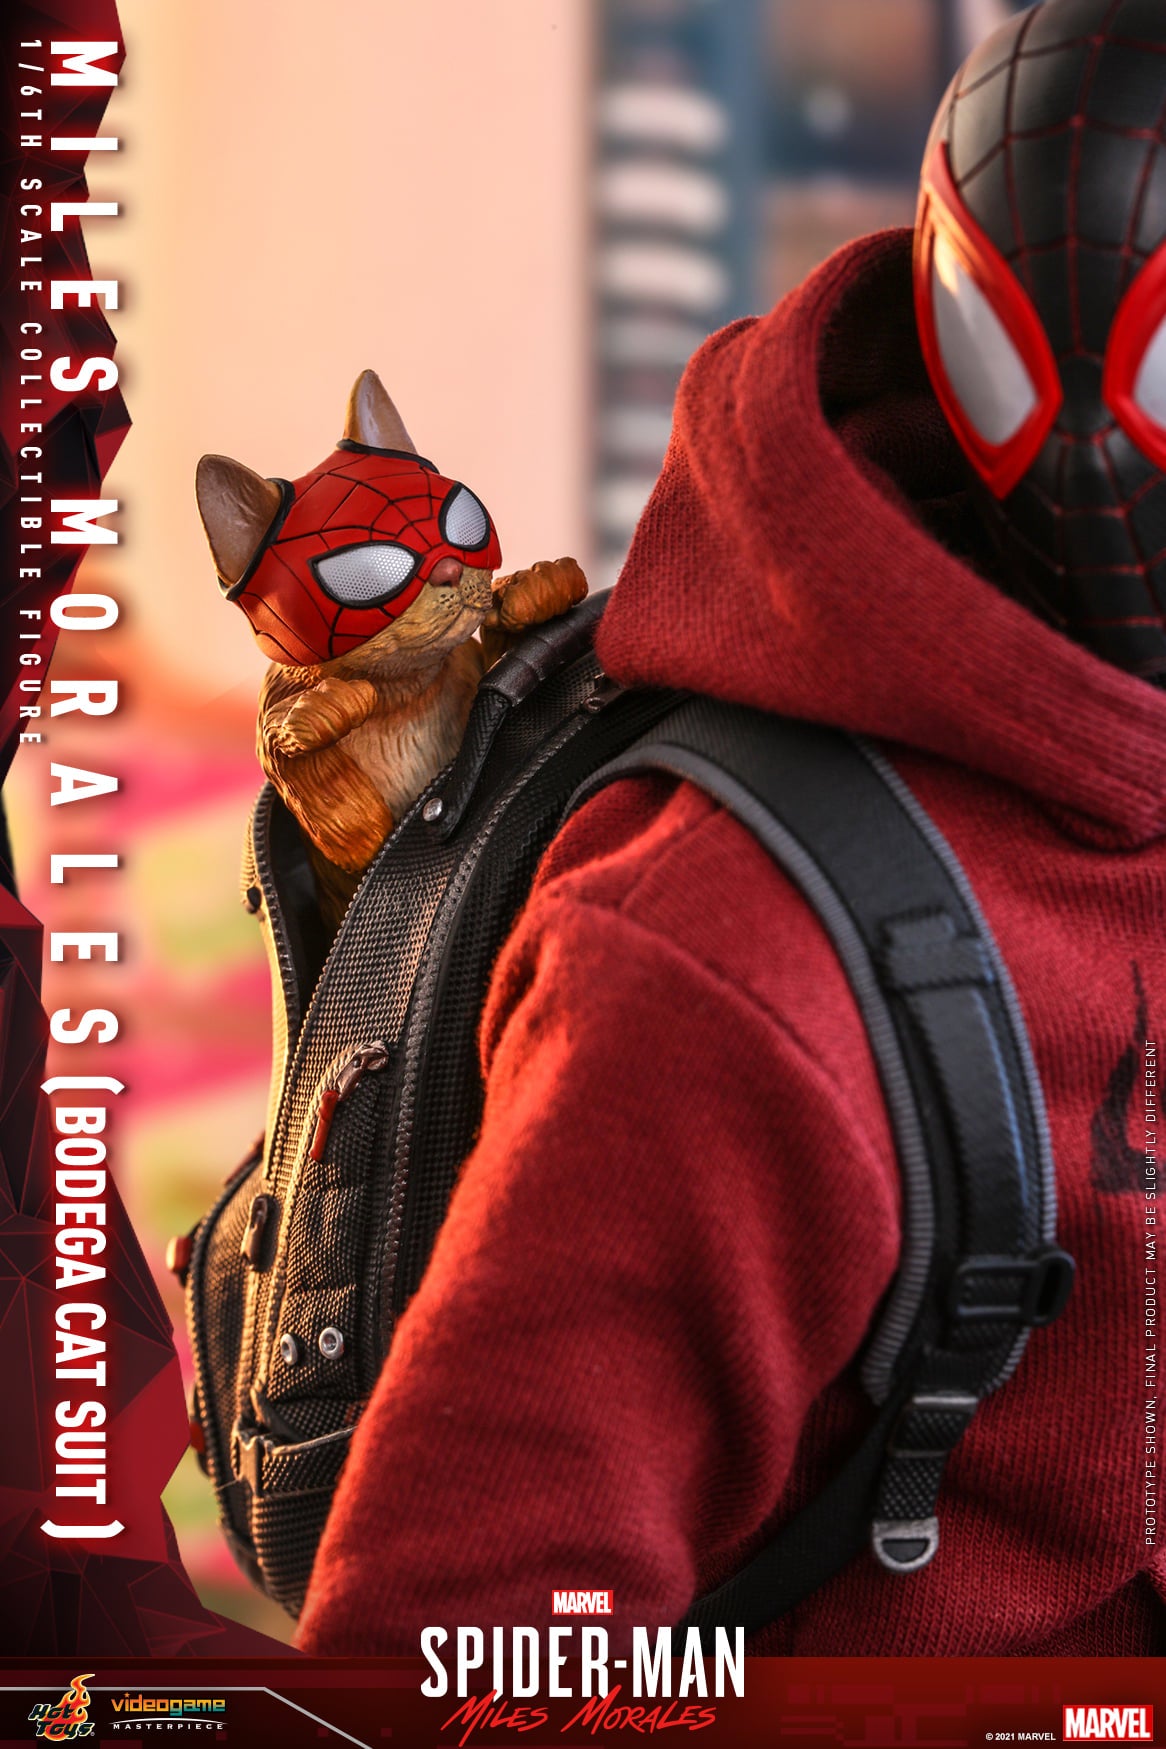 Hot Toys - VGM50 - Marvel&#39;s Spider-Man: Miles Morales - Miles Morales (Bodega Cat Suit) - Marvelous Toys